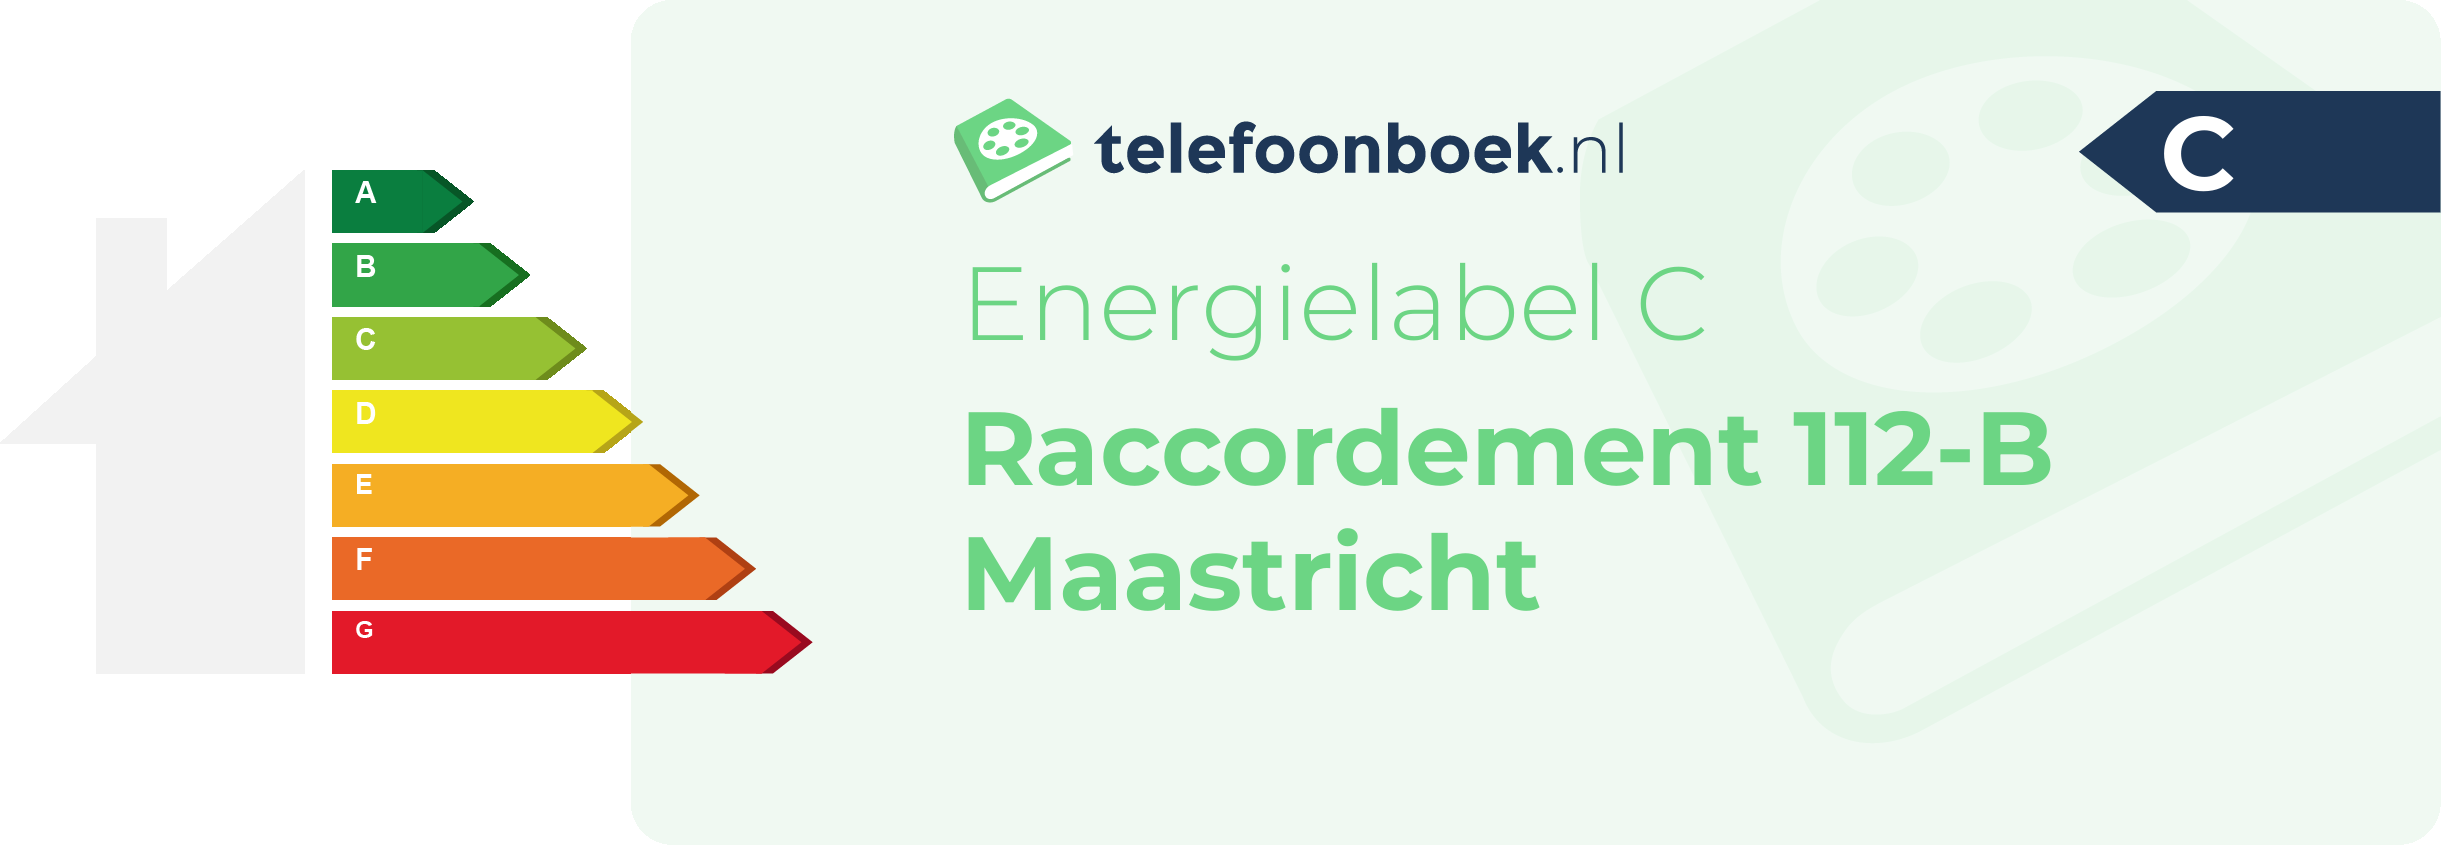 Energielabel Raccordement 112-B Maastricht